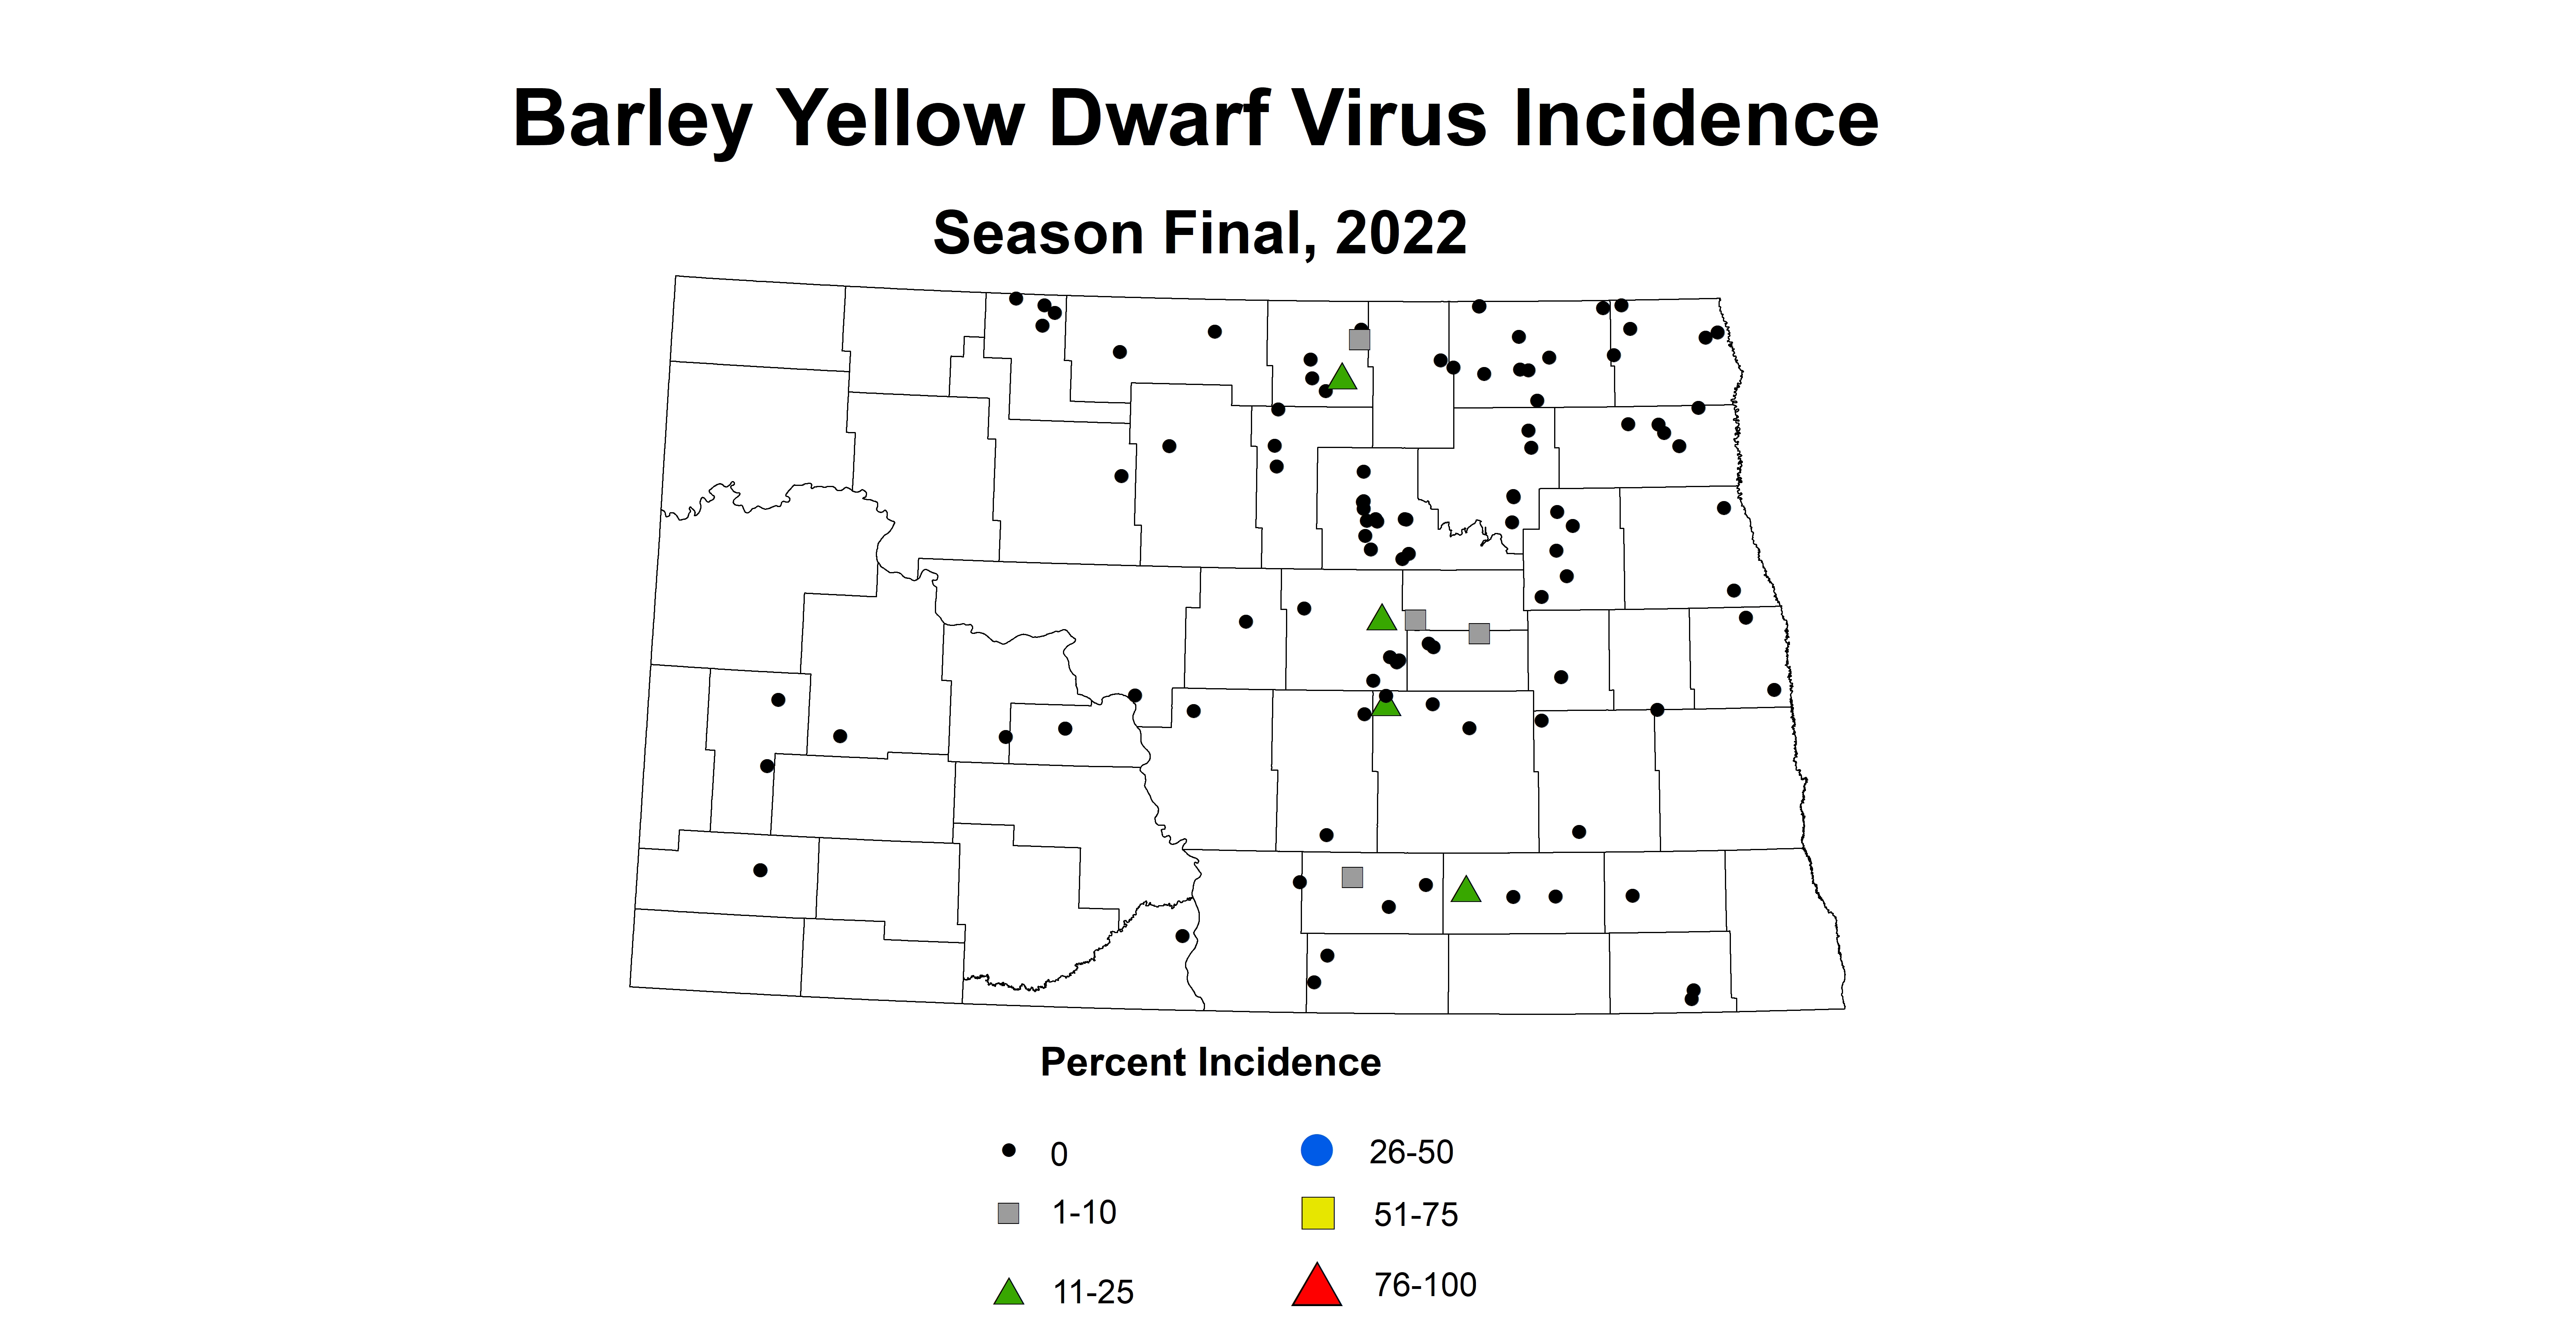 barley yellow dwarf virus incidence 2022 season final